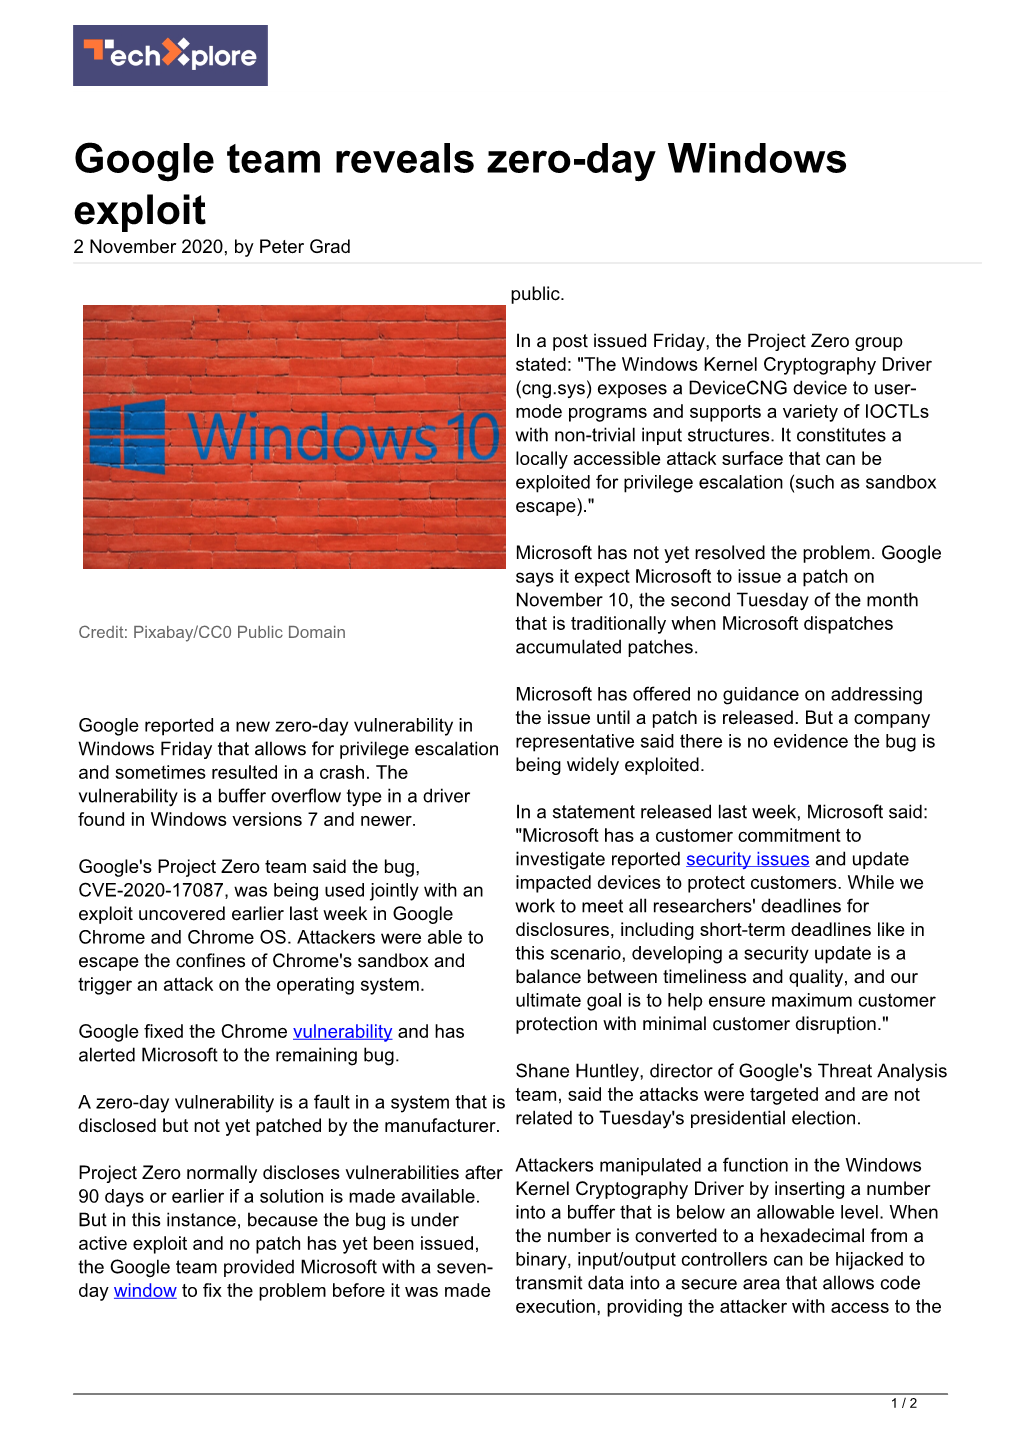 Google Team Reveals Zero-Day Windows Exploit 2 November 2020, by Peter Grad